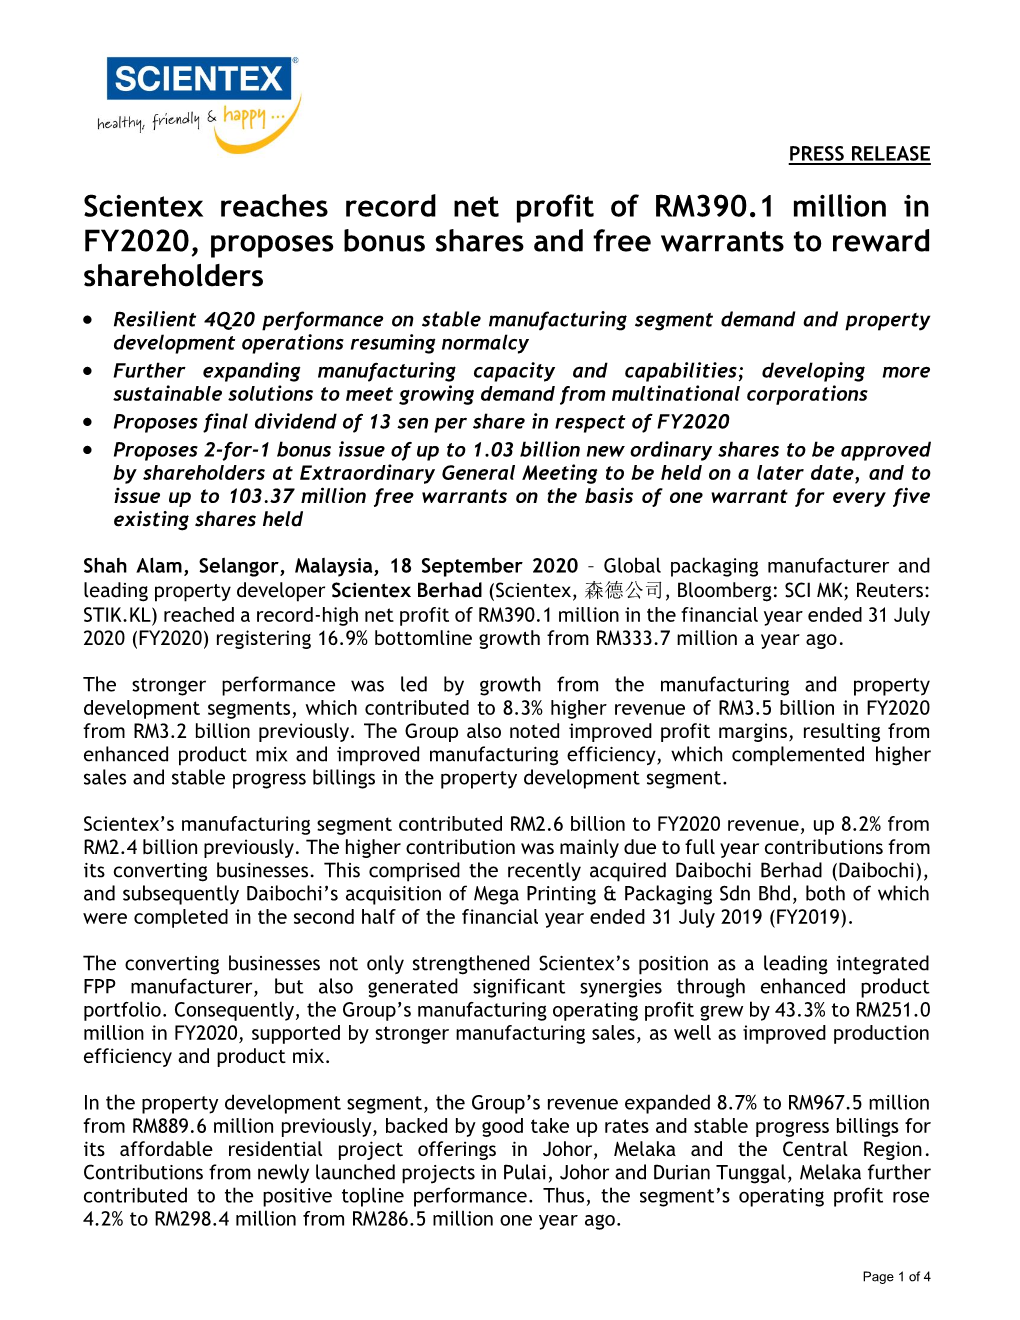 Scientex Reaches Record Net Profit of RM390.1 Million